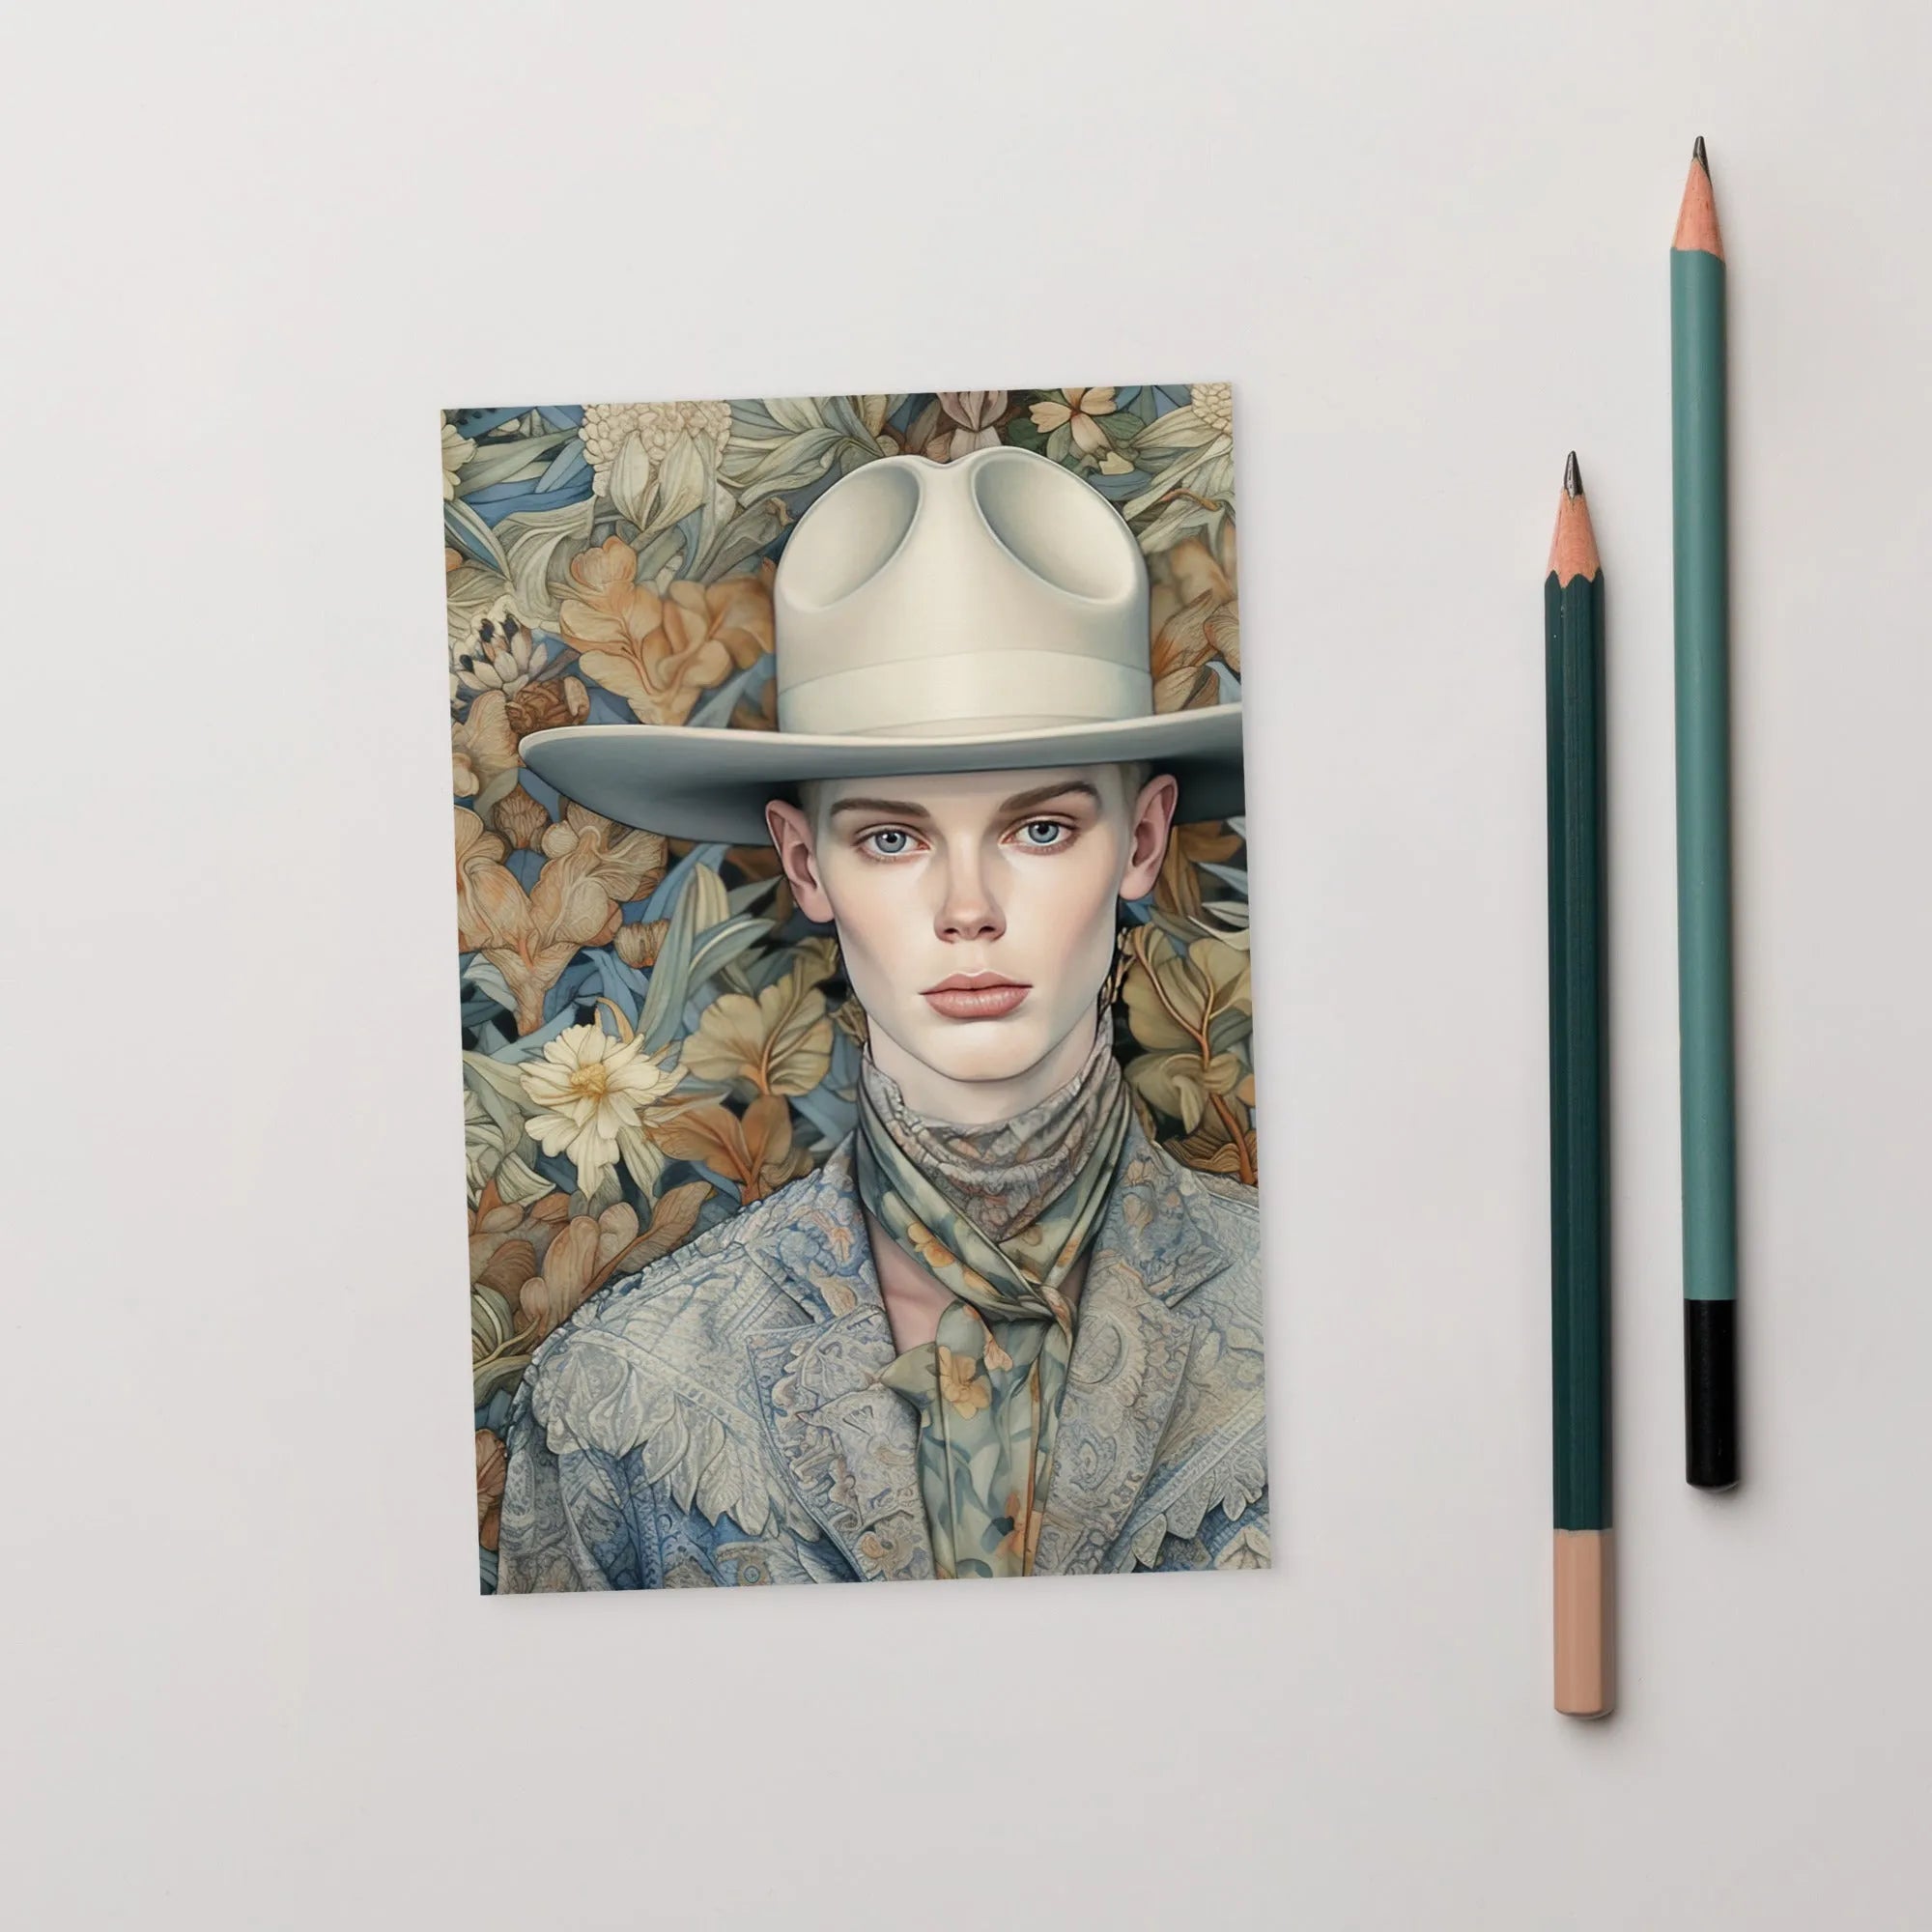 Jasper - Gay Cowboy Art Print - Twink Outlaw Queerart Dandy - 4’x6’ - Posters Prints & Visual Artwork - Aesthetic Art